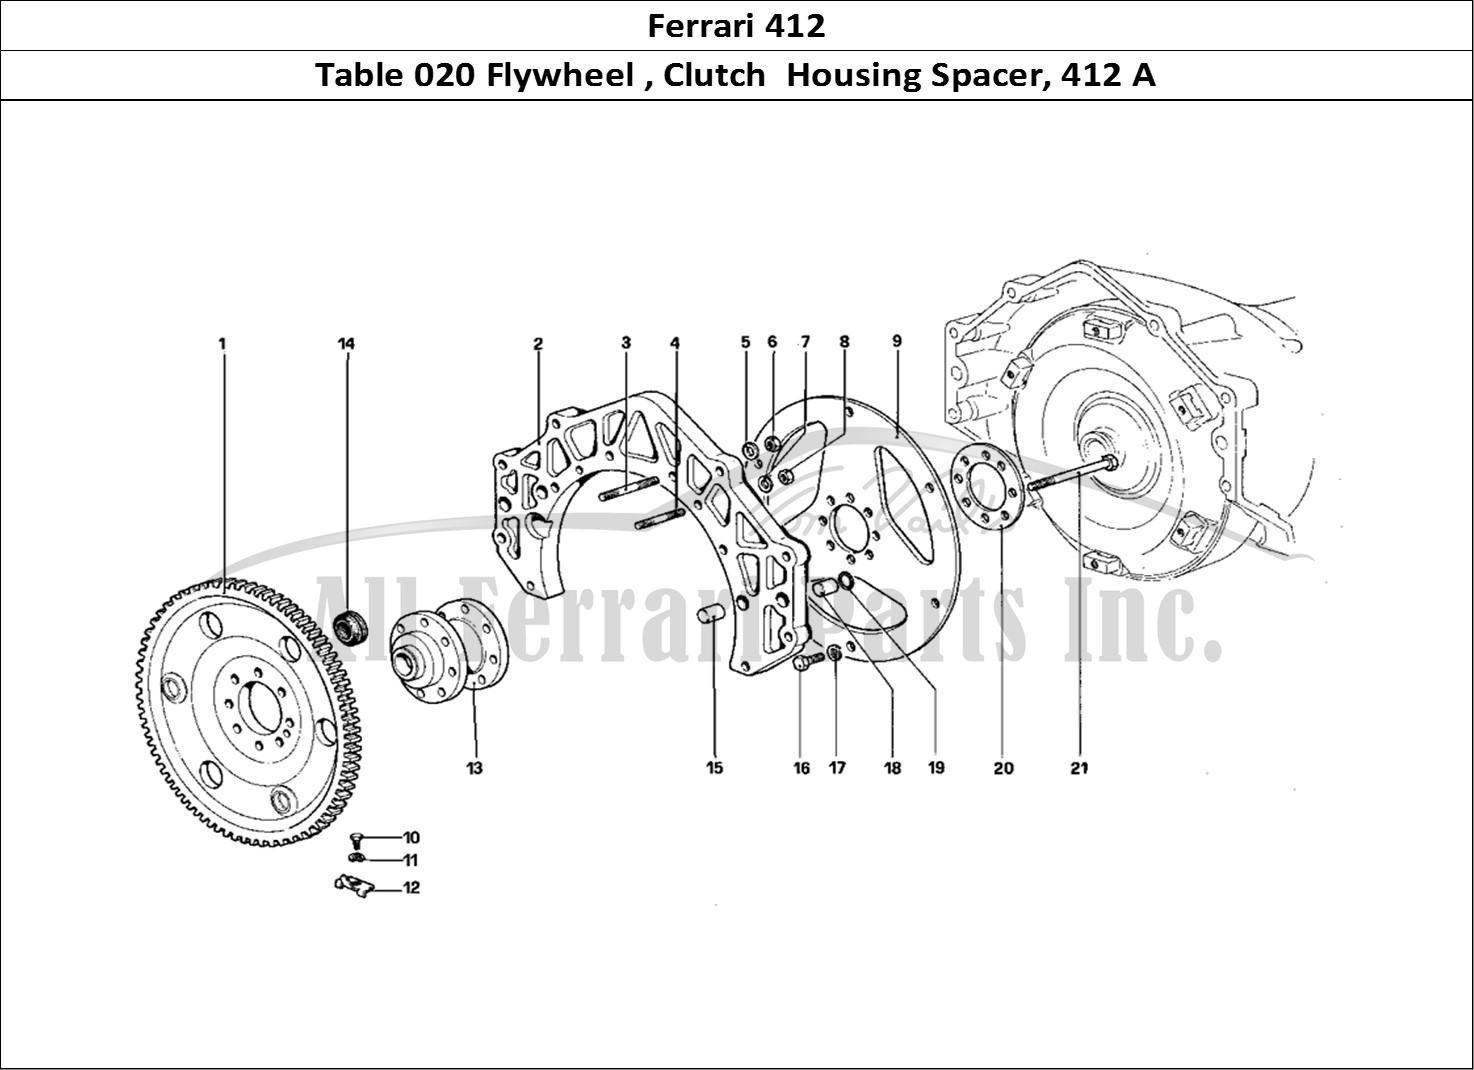 Ferrari Parts Ferrari 412 (Mechanical) Page 020 Engine Flywheel and ClutC